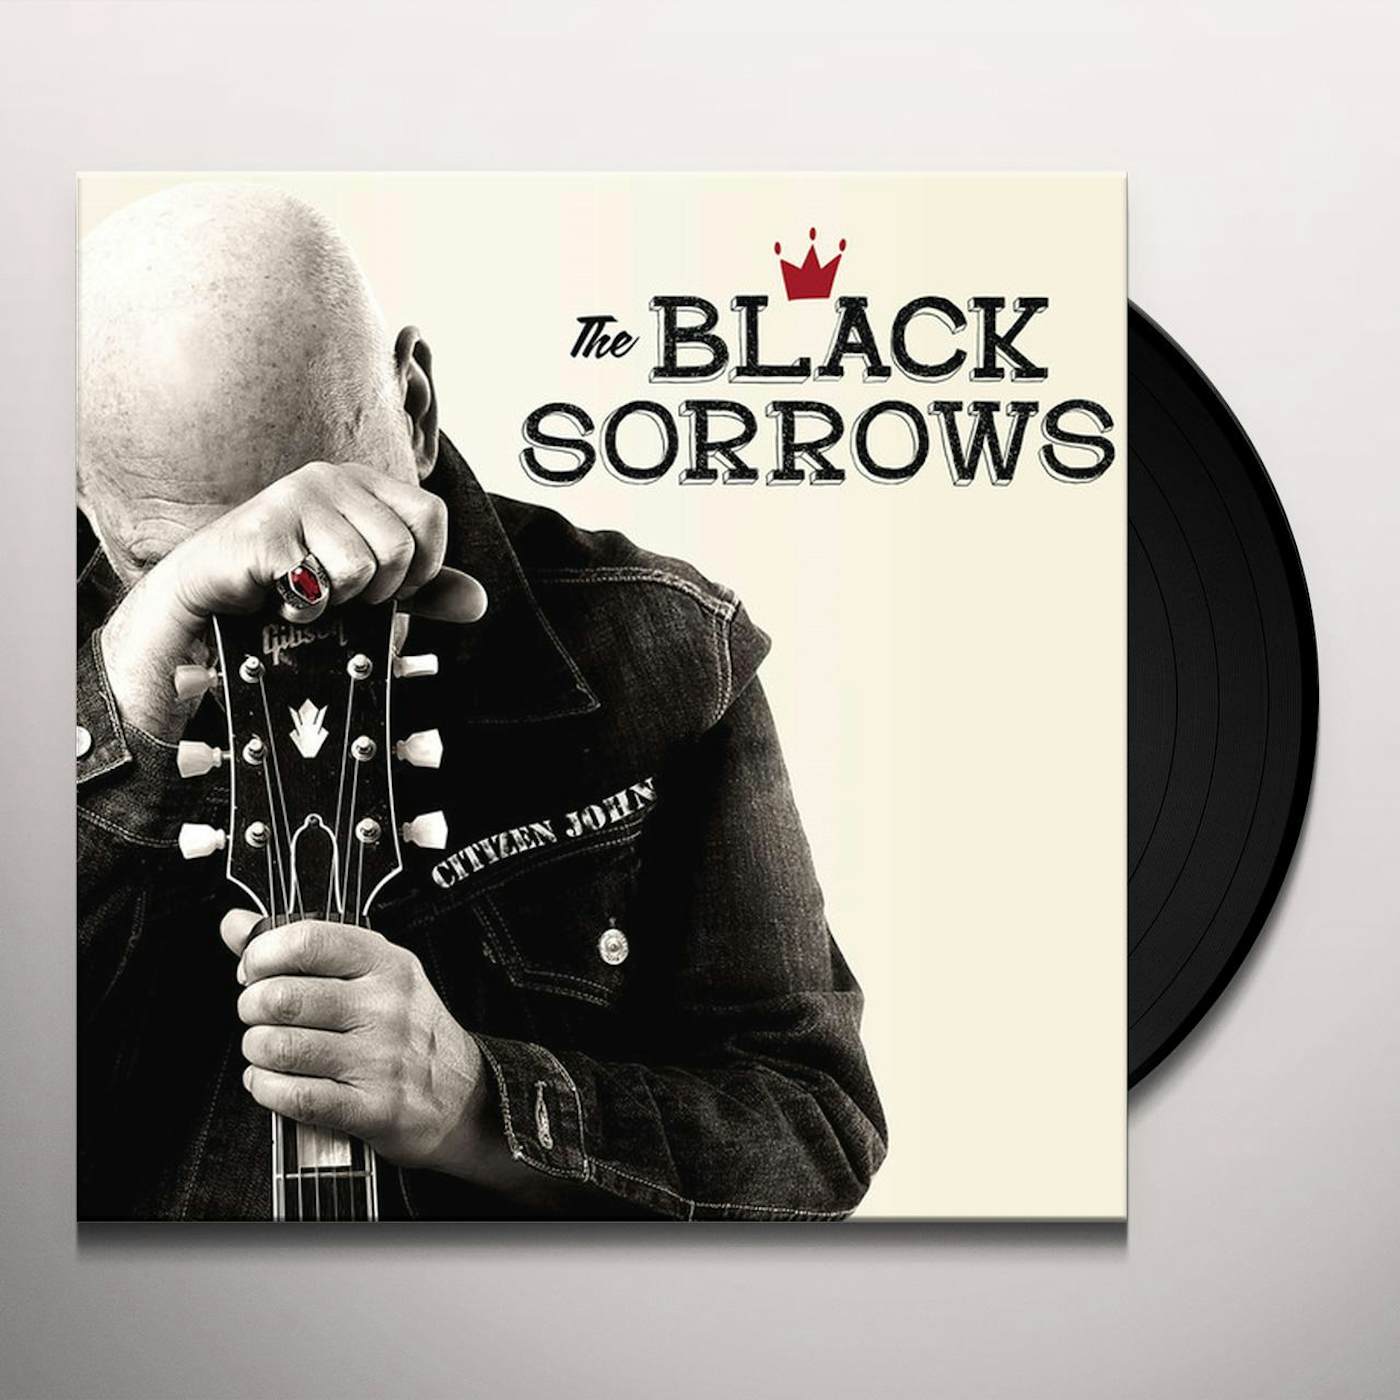 The Black Sorrows Citizen John Vinyl Record